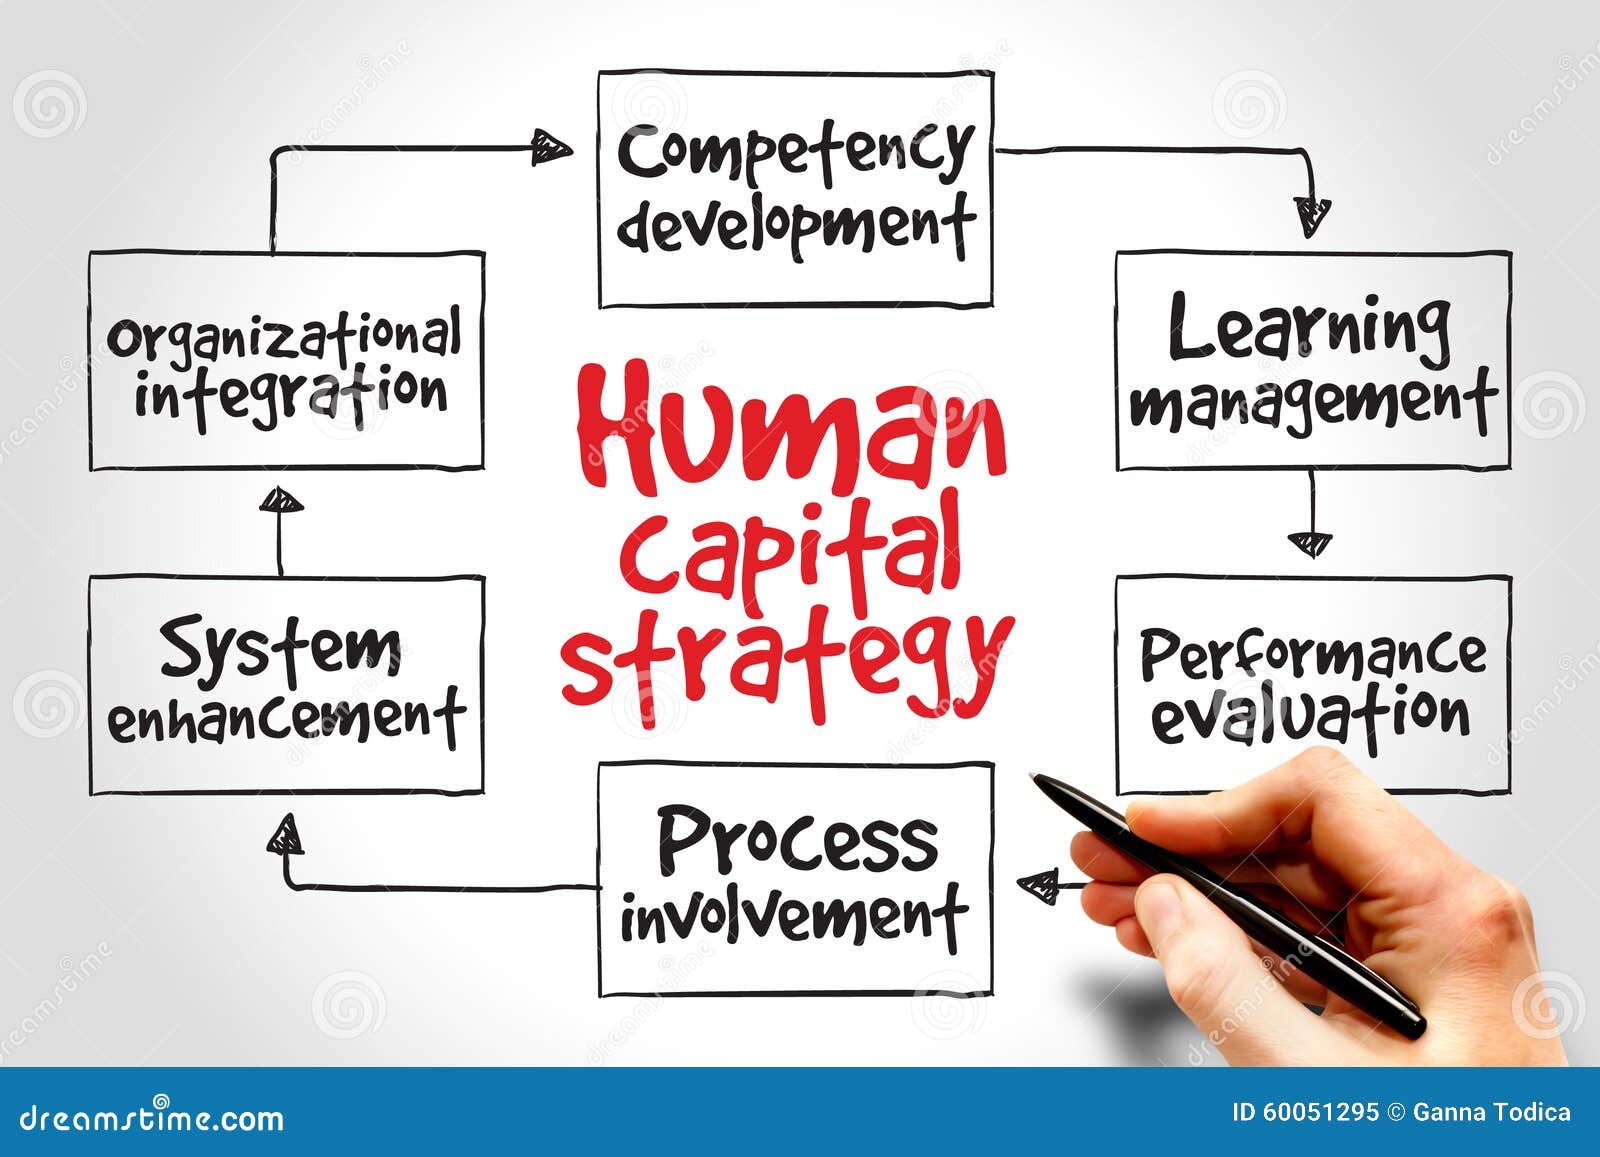 human capital strategy